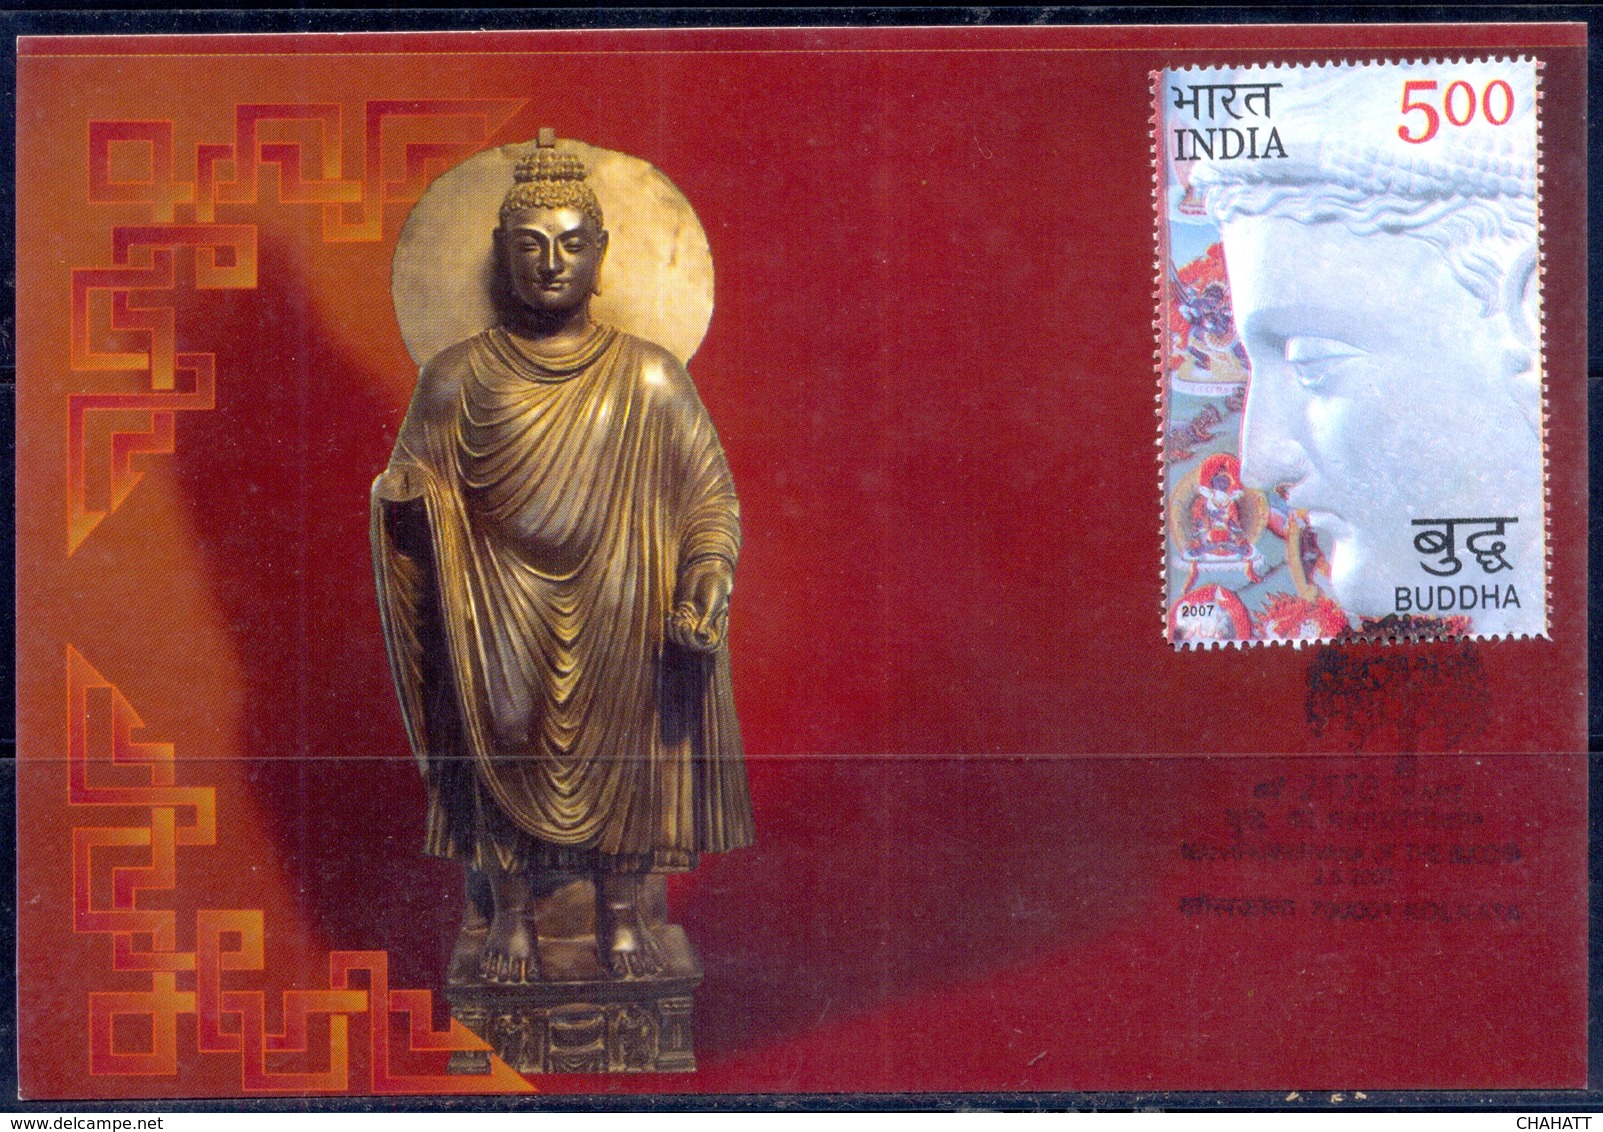 RELIGIONS-BUDDHISM- 2550 YEARS OF MAHAPARINIRVANA -MAXIMUM CARD #5- INDIA-2007- MC-64 - Bouddhisme